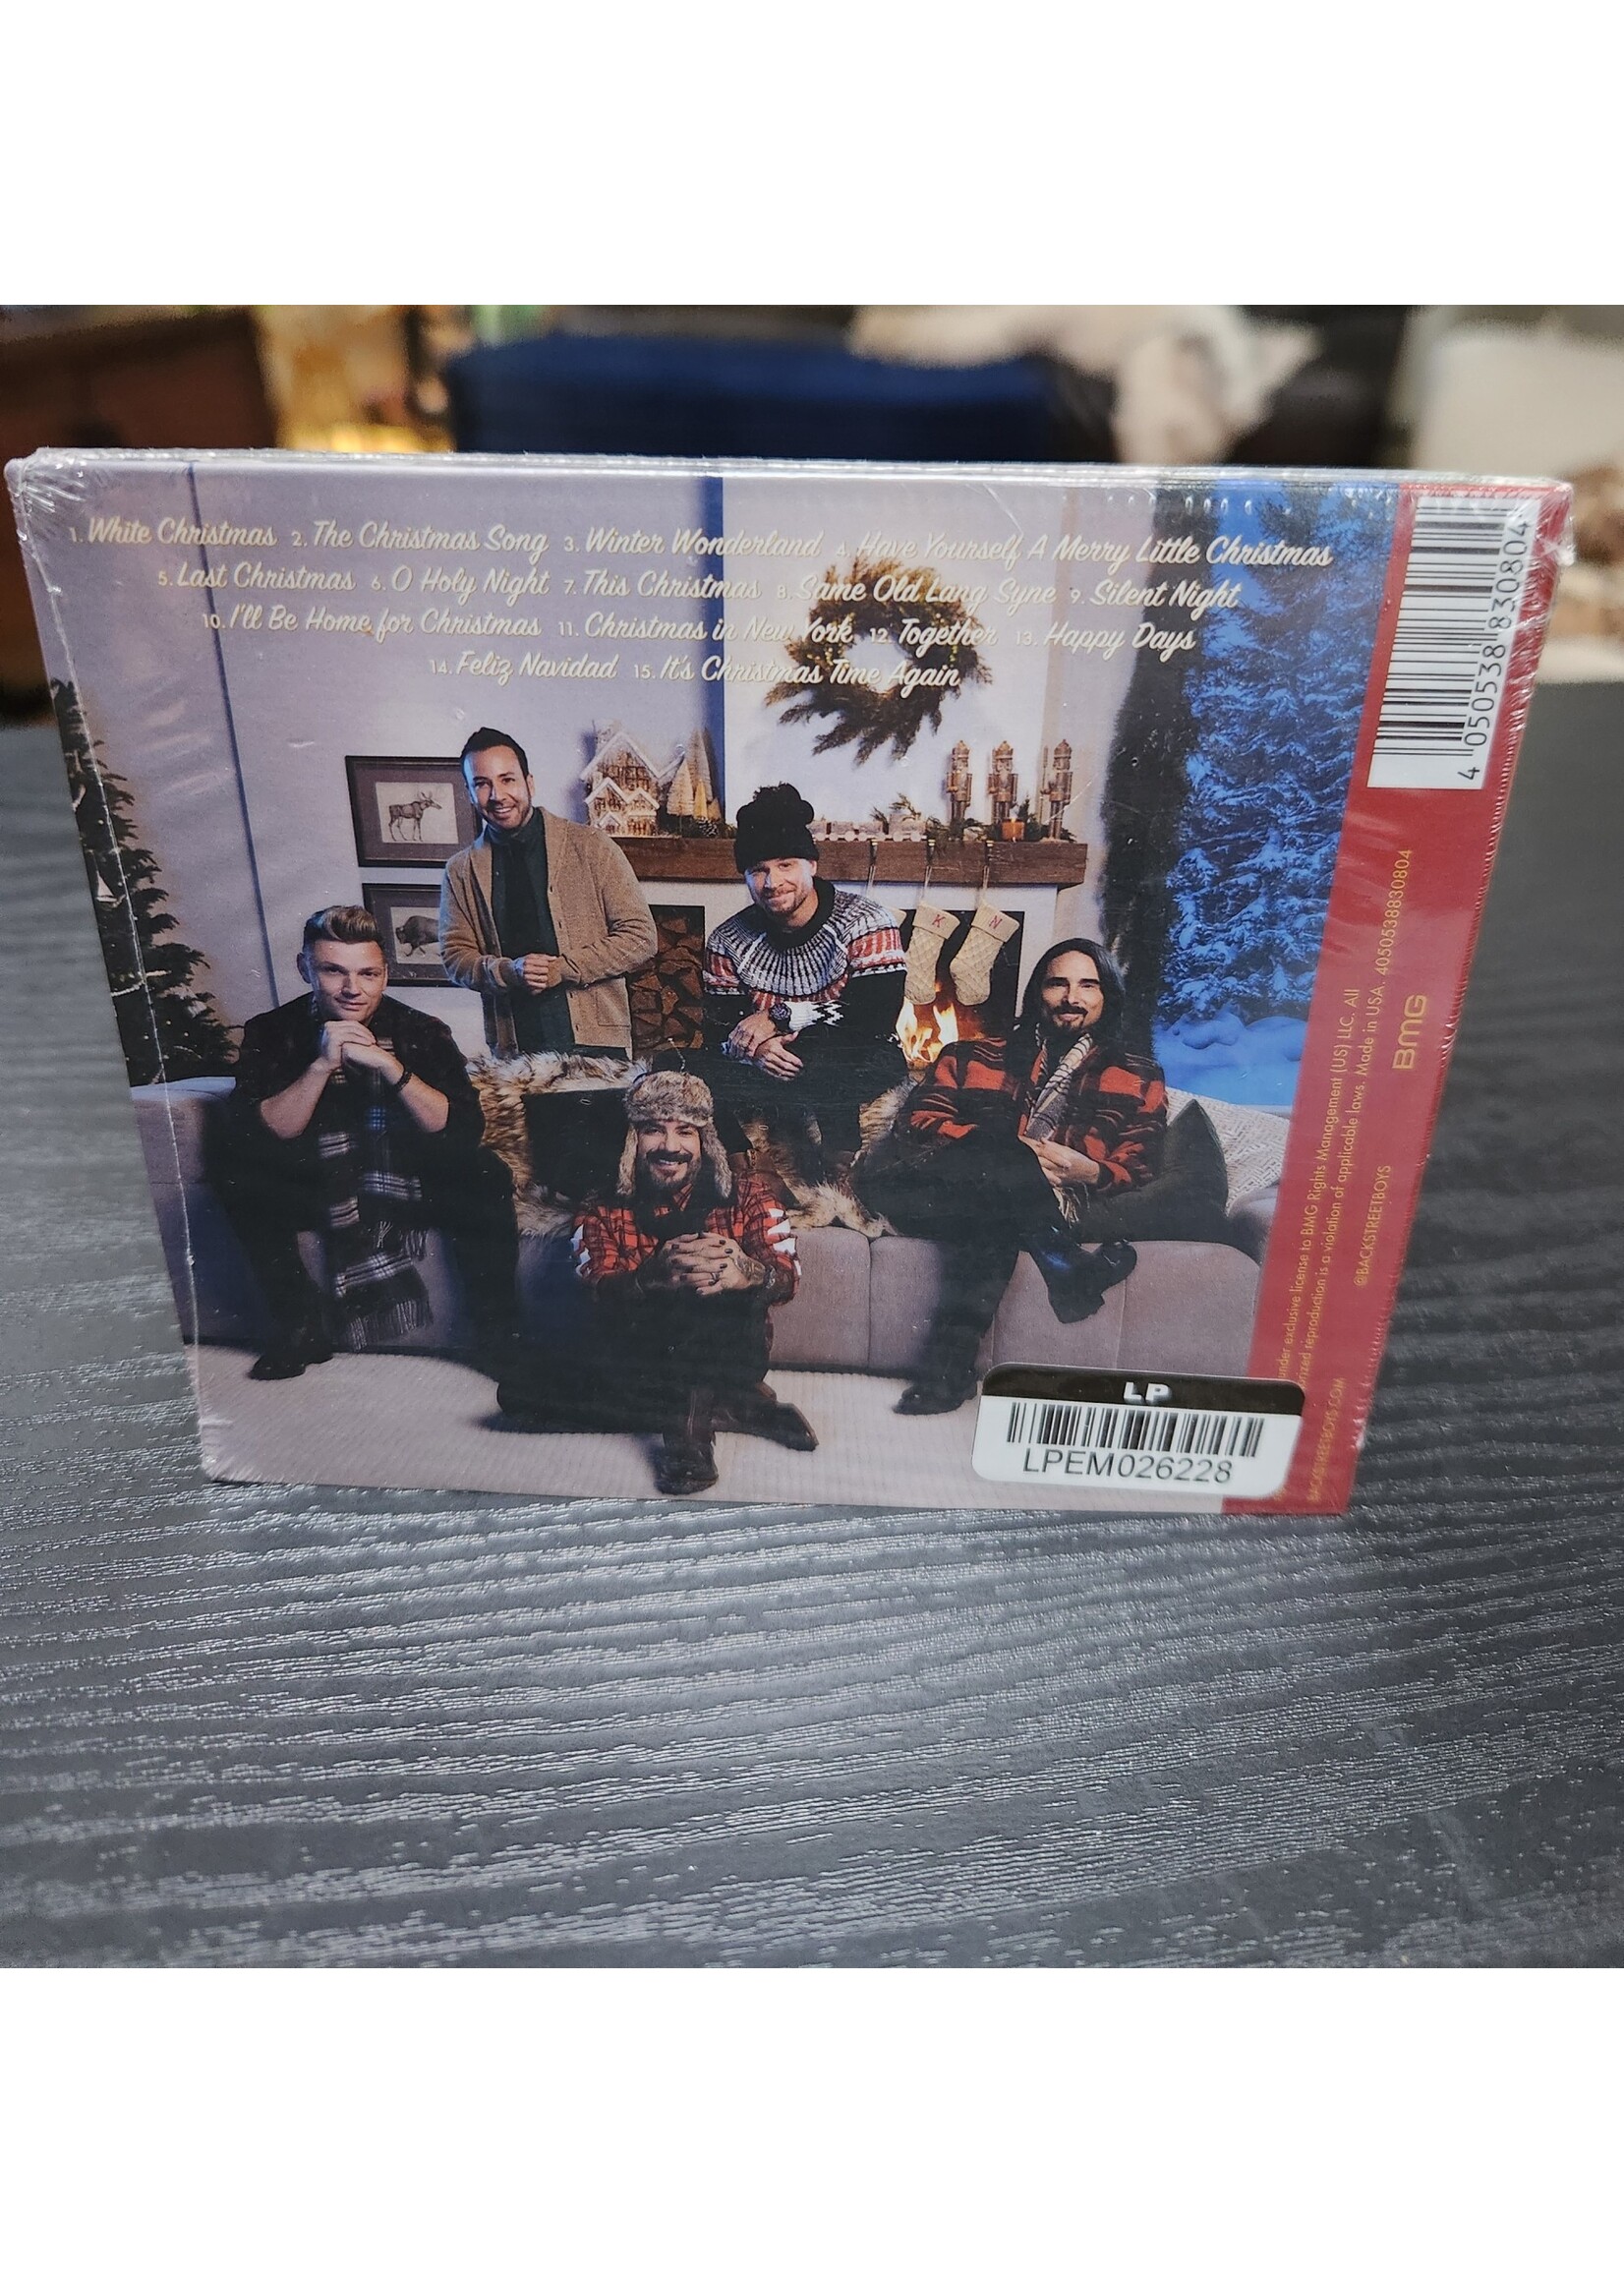 Backstreet Boys - A Very Backstreet Christmas CD (Target Exclusive)